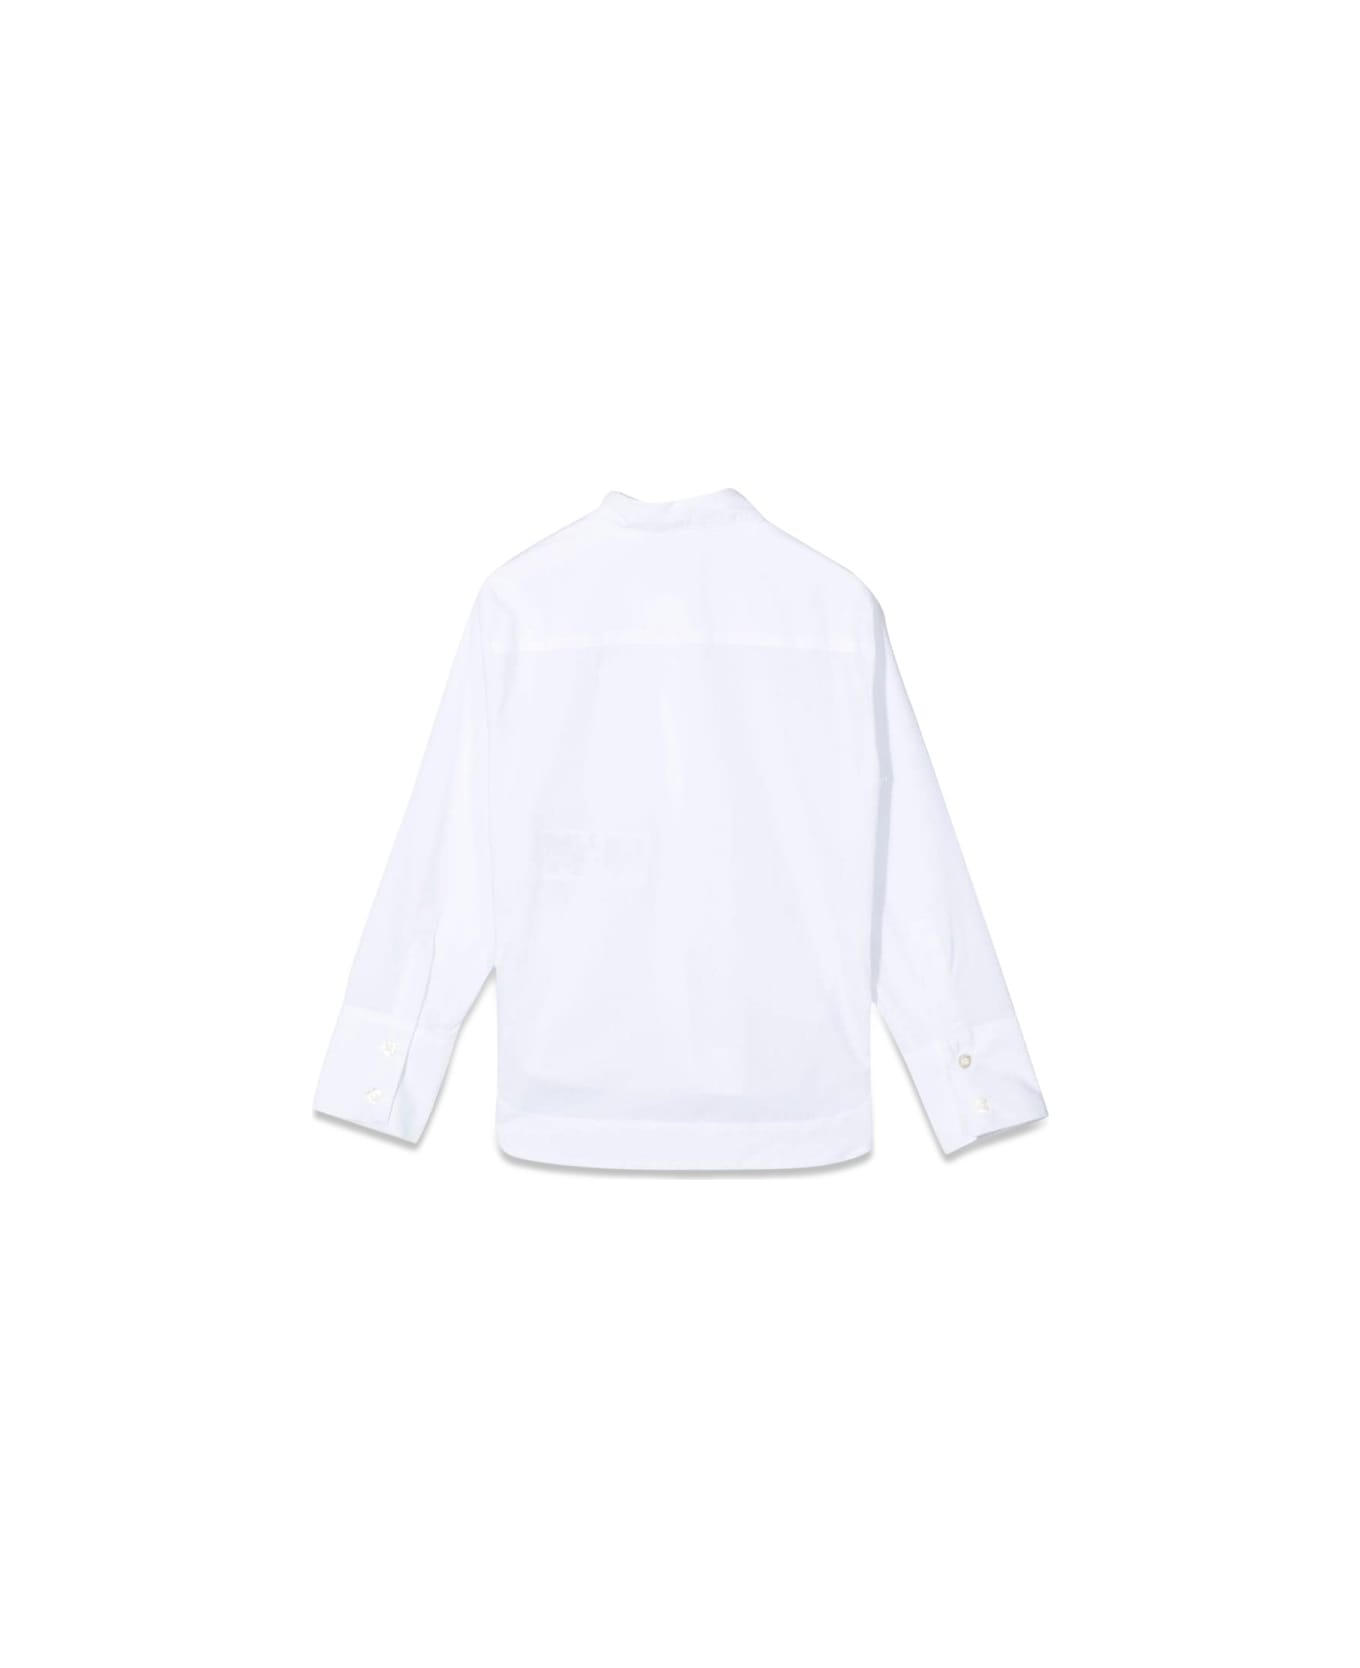 Emporio Armani Shirt M/l - WHITE シャツ